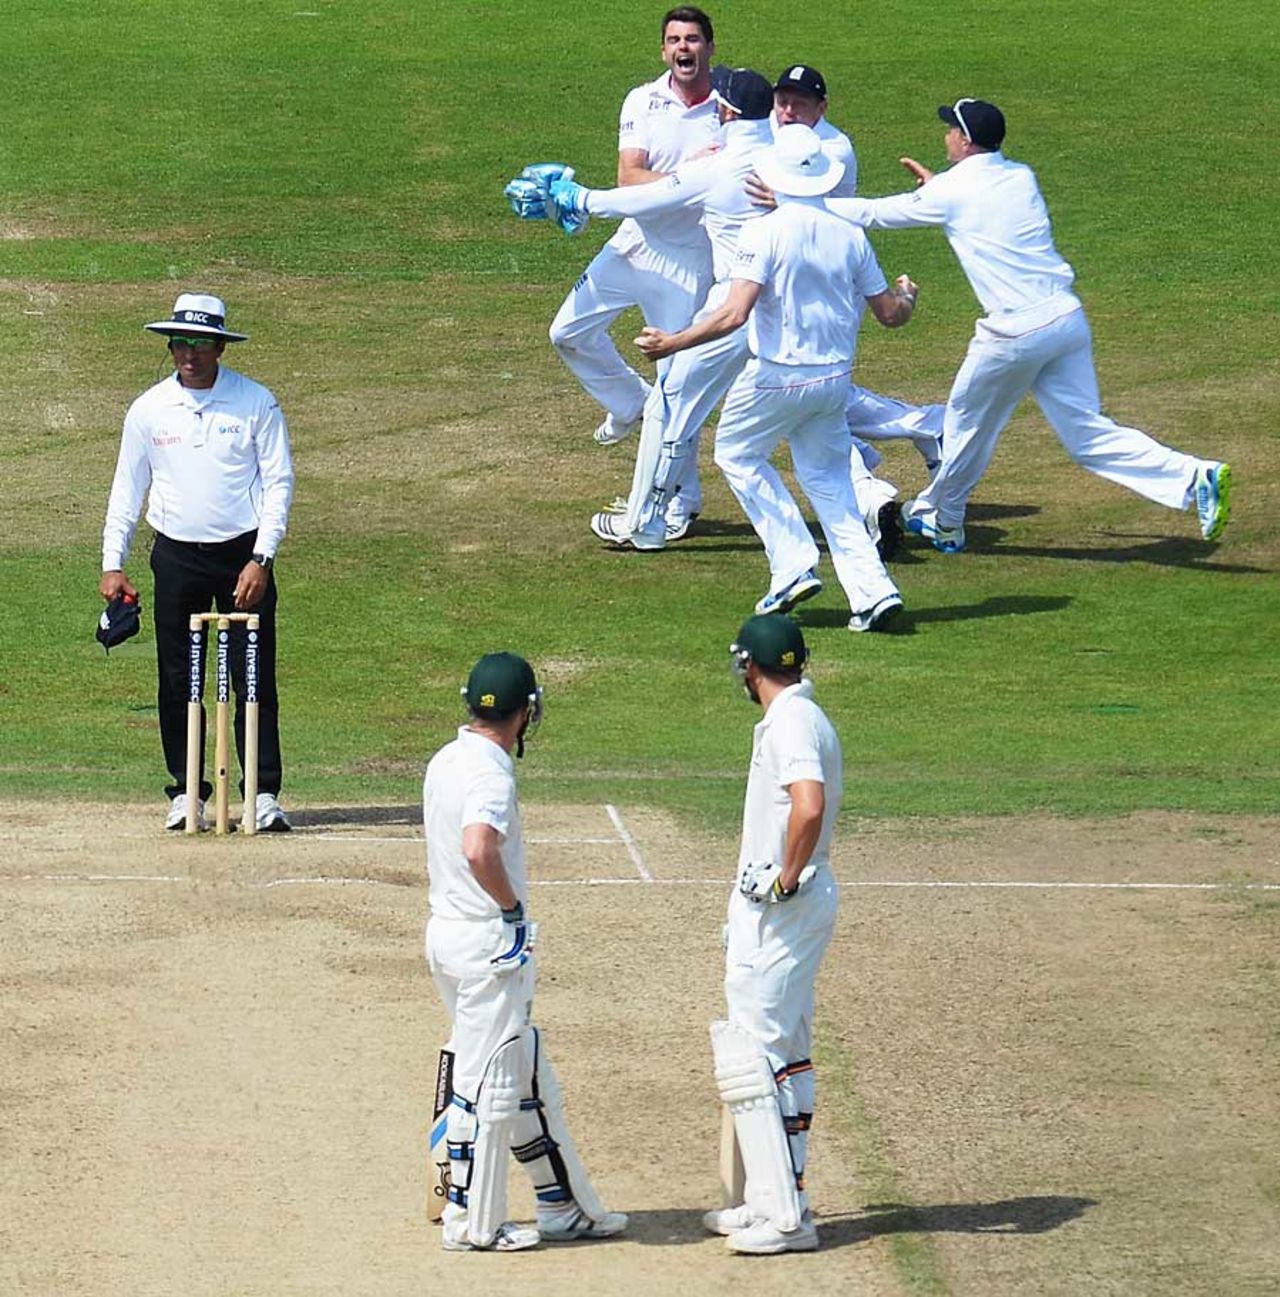 Contrasting emotions: England celebrate as Australia's batsmen look on, England v Australia, 1st Investec Test, Trent Bridge, 5th day, July 14, 2013